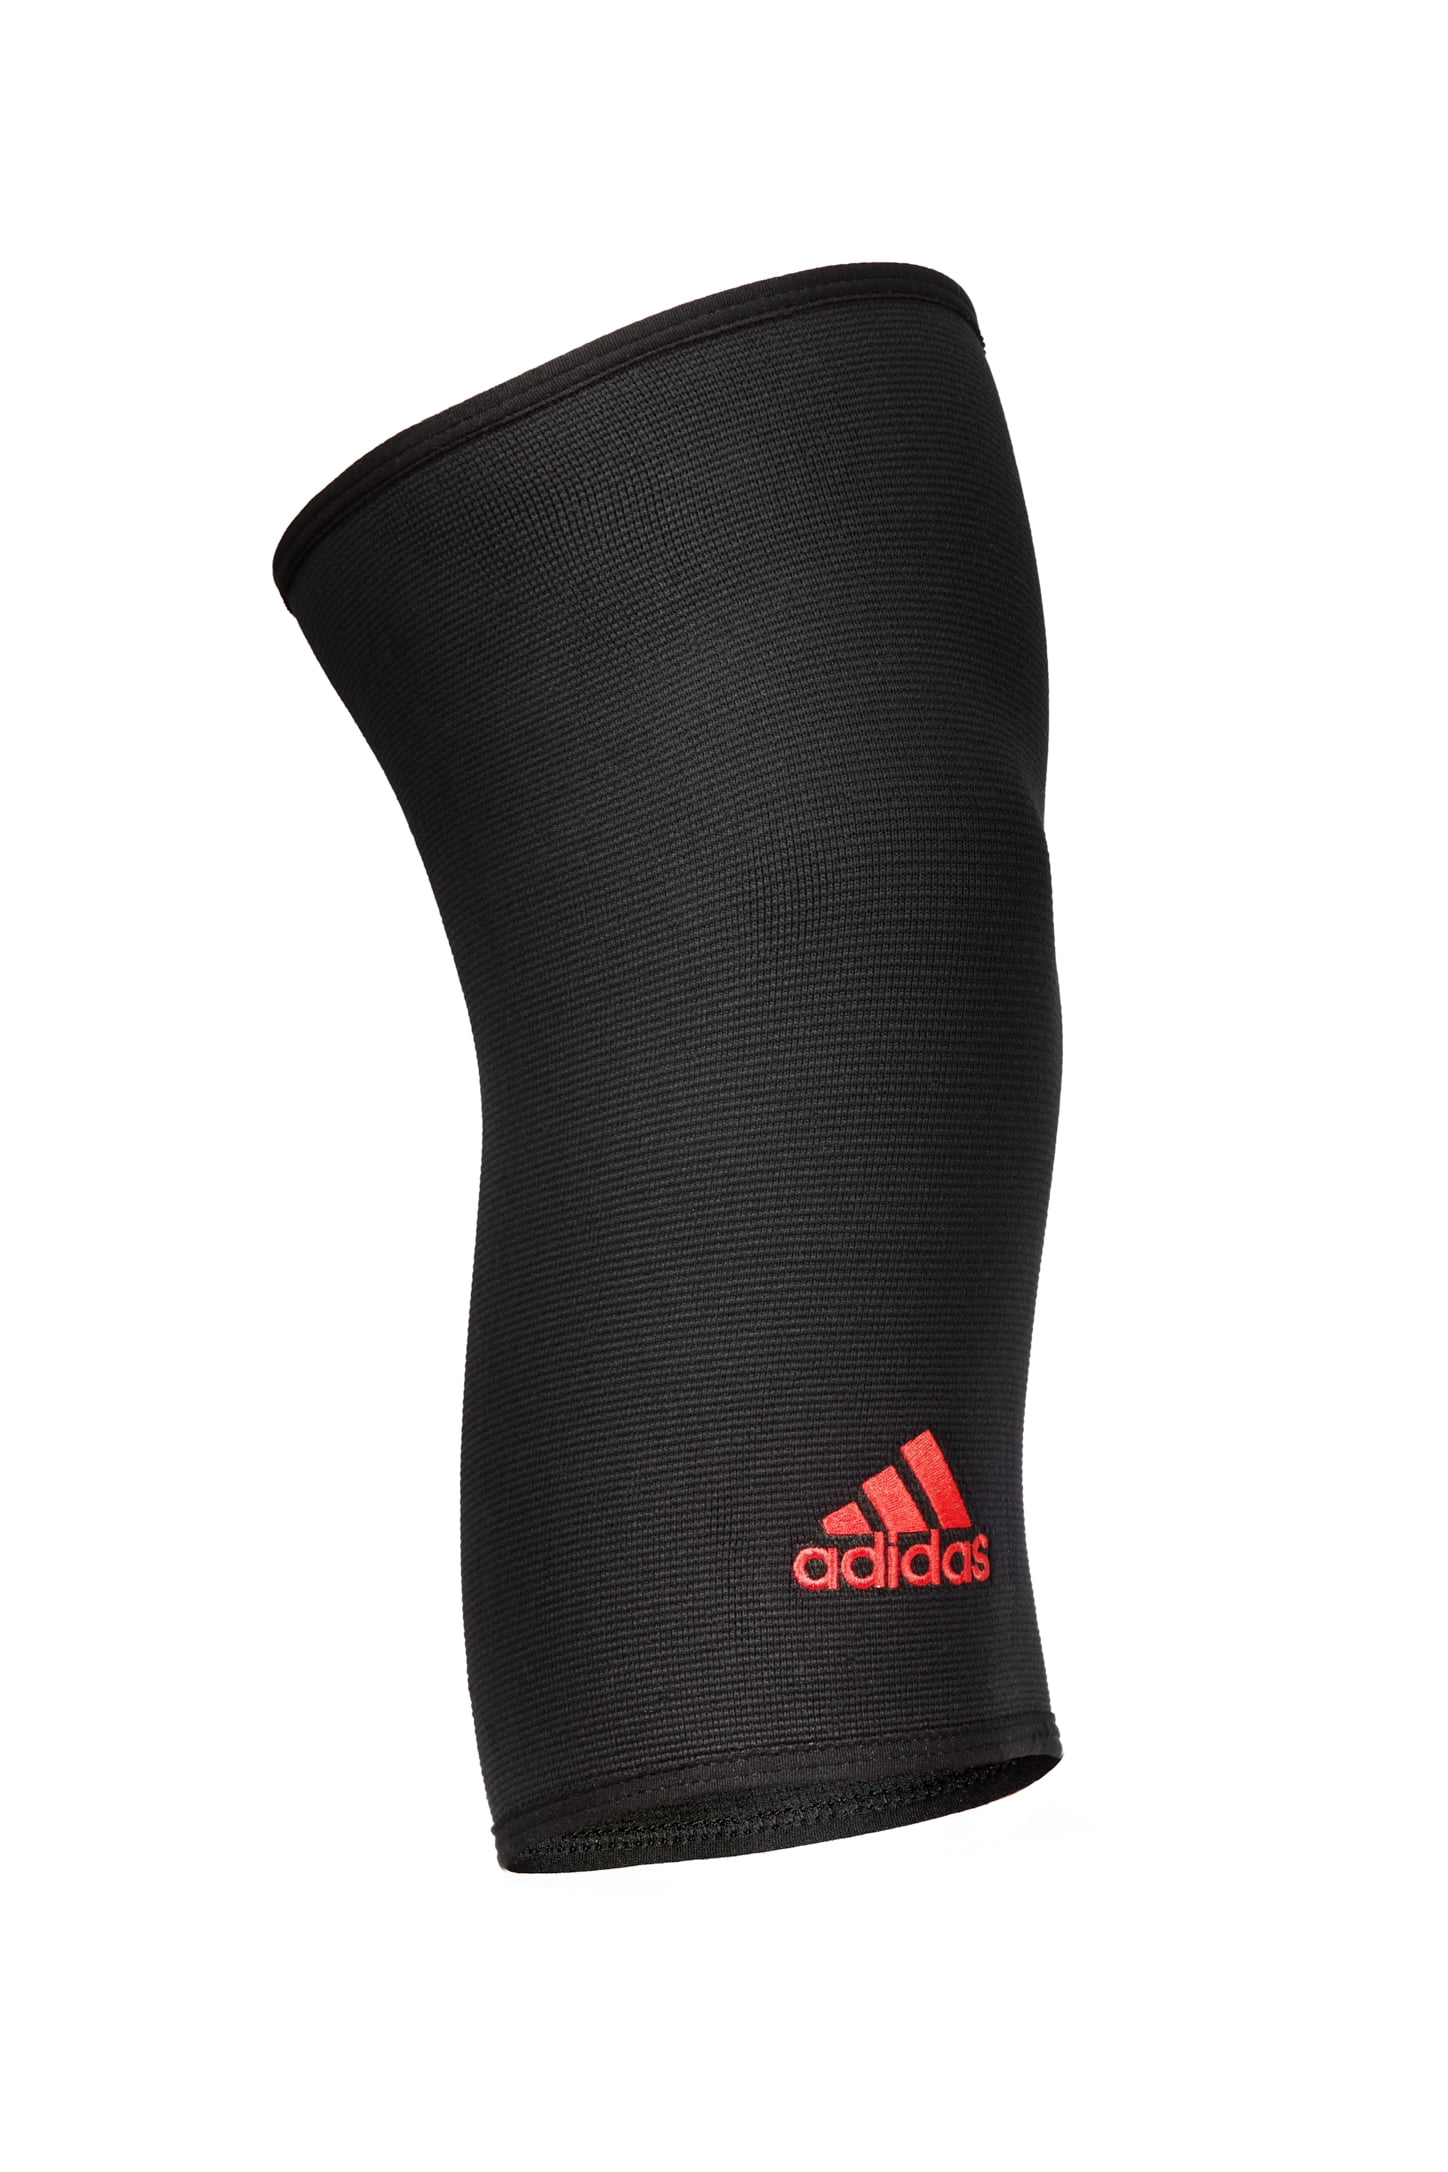 adidas compression knee sleeve